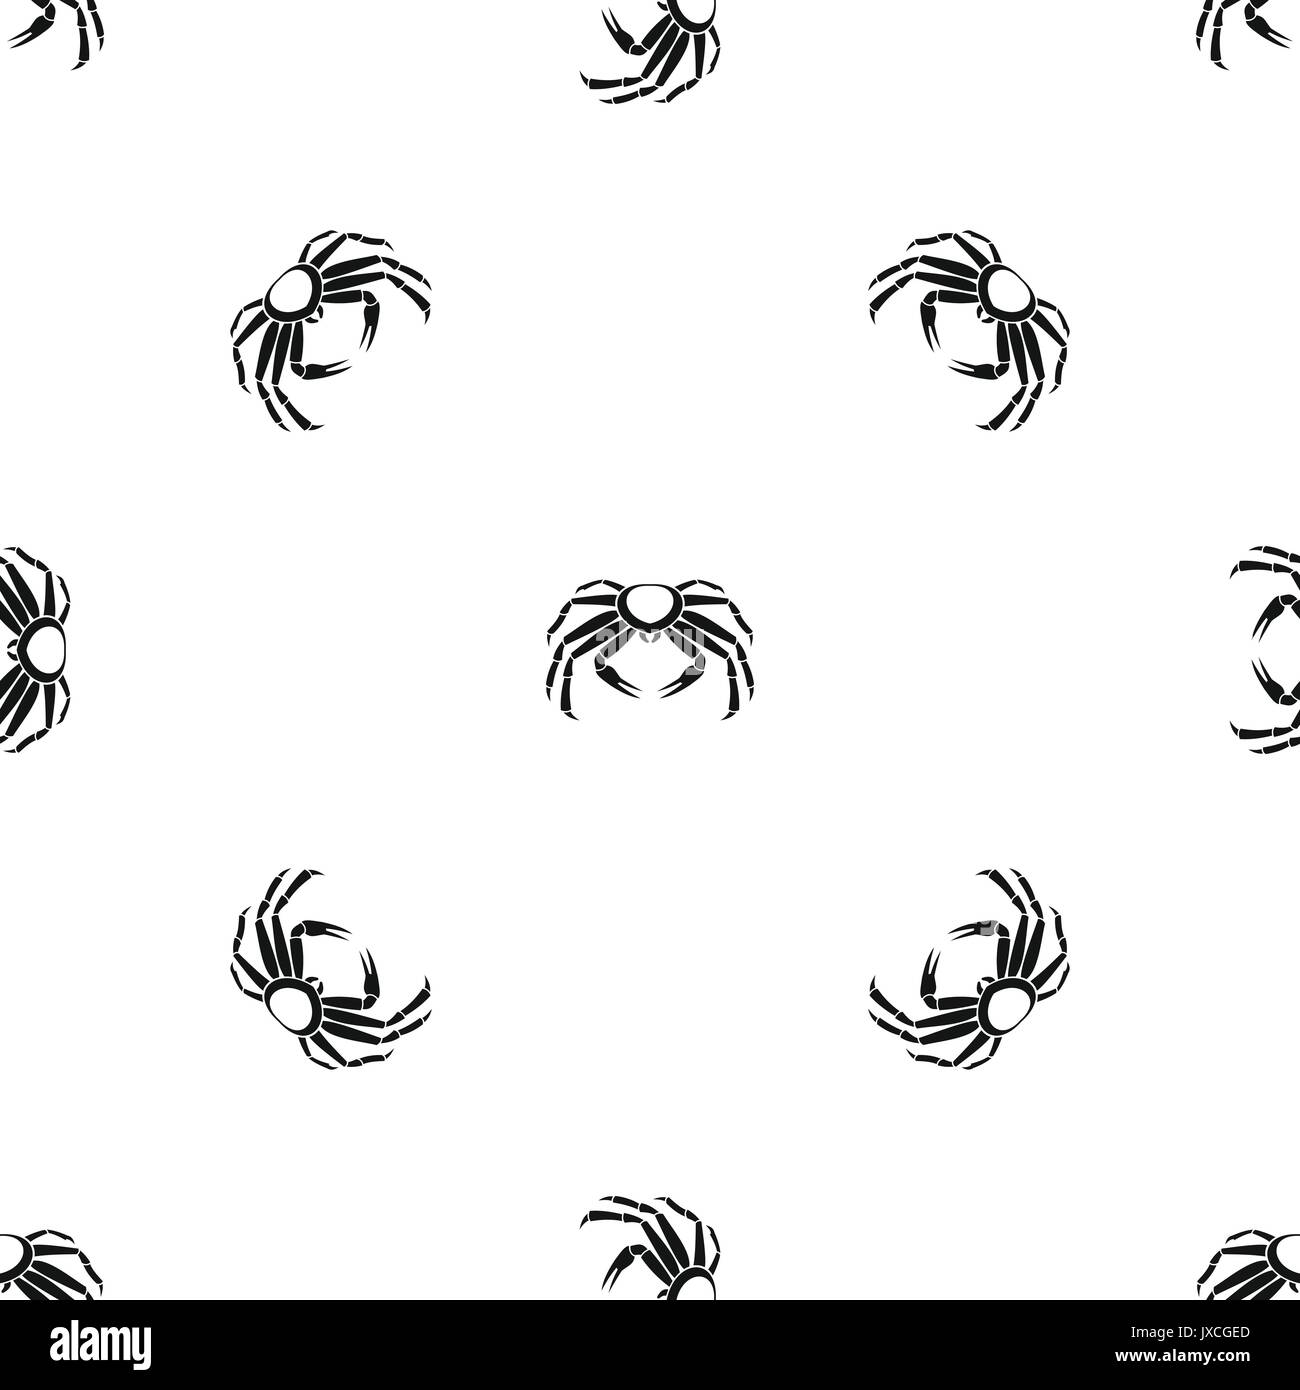 Snow crab pattern seamless black Stock Vector